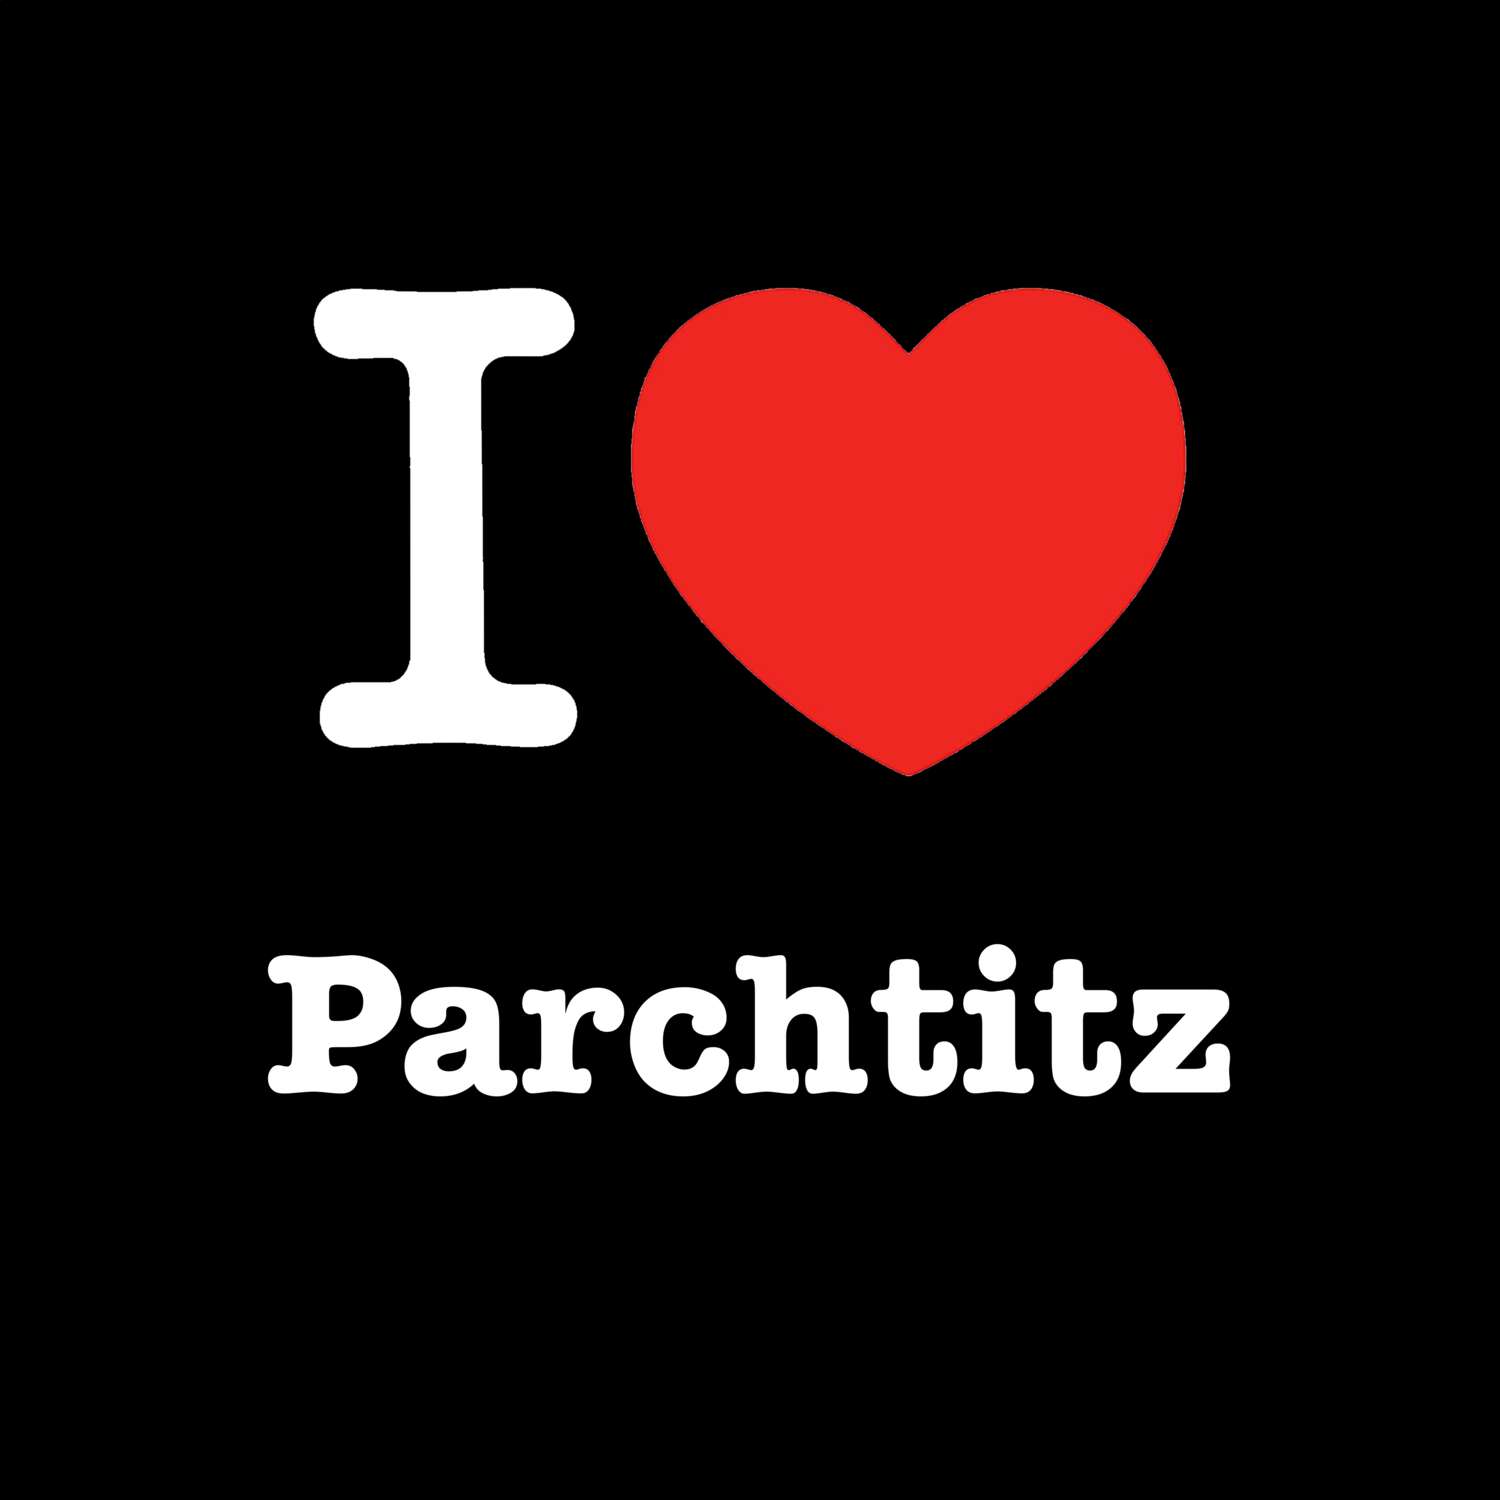 Parchtitz T-Shirt »I love«